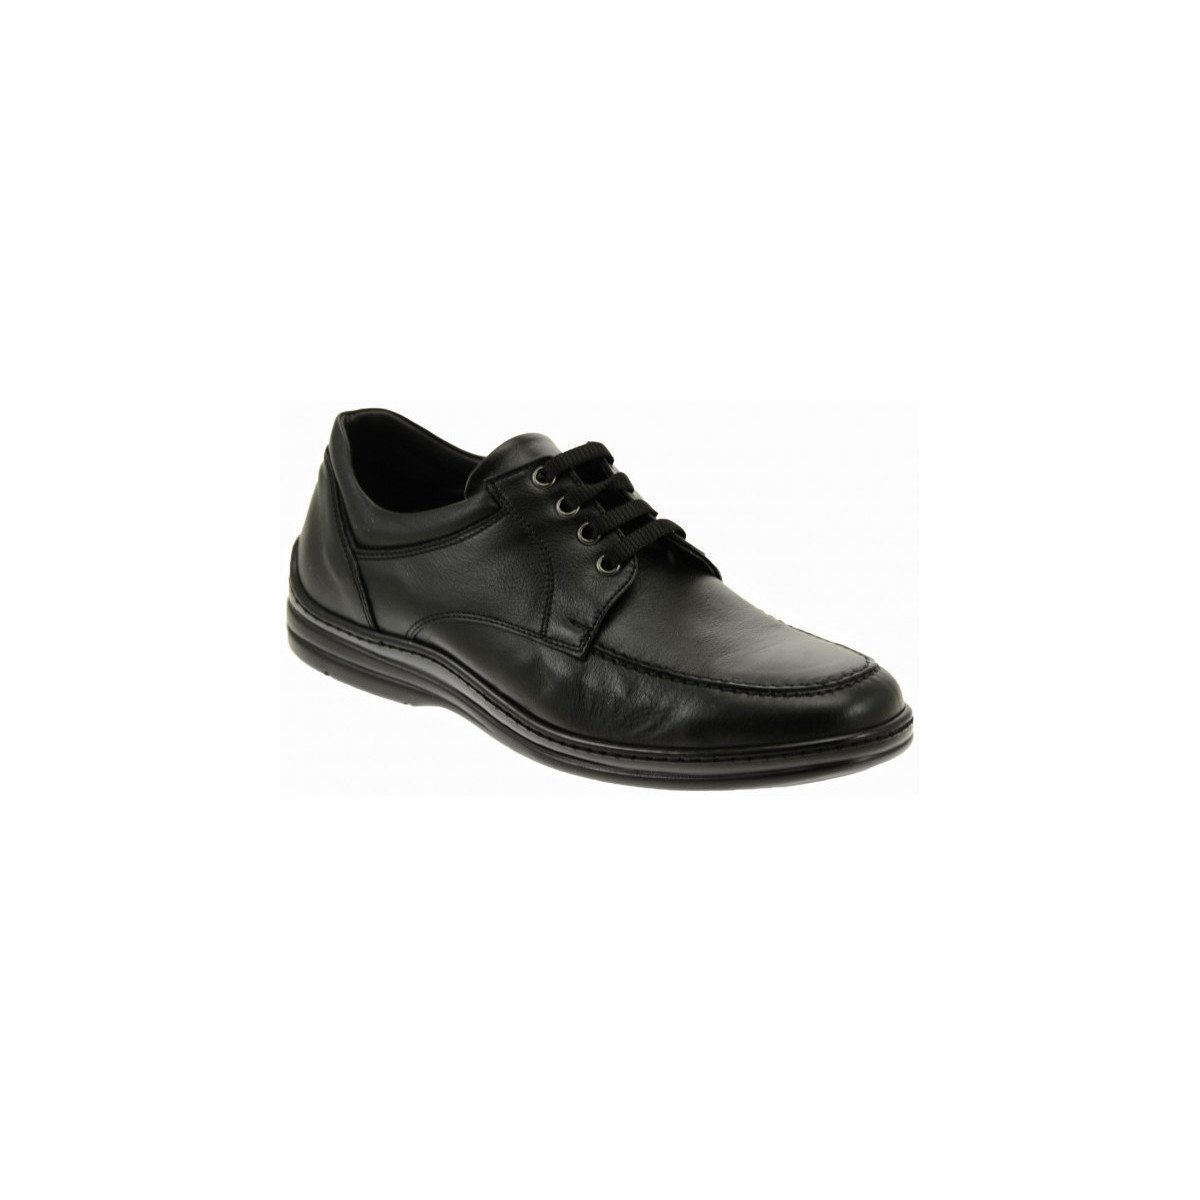 Pantofi Bărbați Sneakers Fontana 5670 V Negru